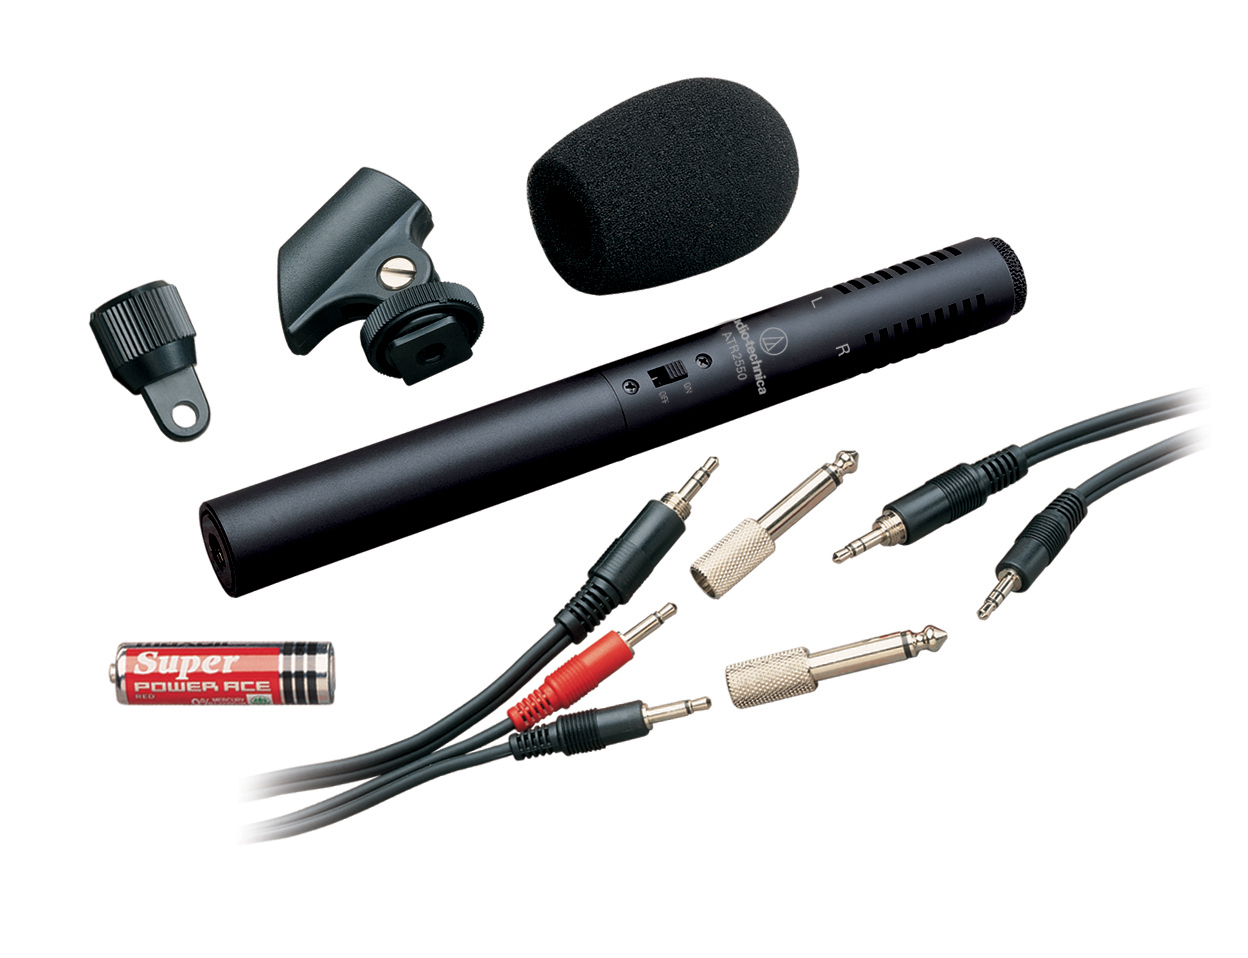 Audio-Technica Audio-Technica ATR6250 Stereo Video Microphone